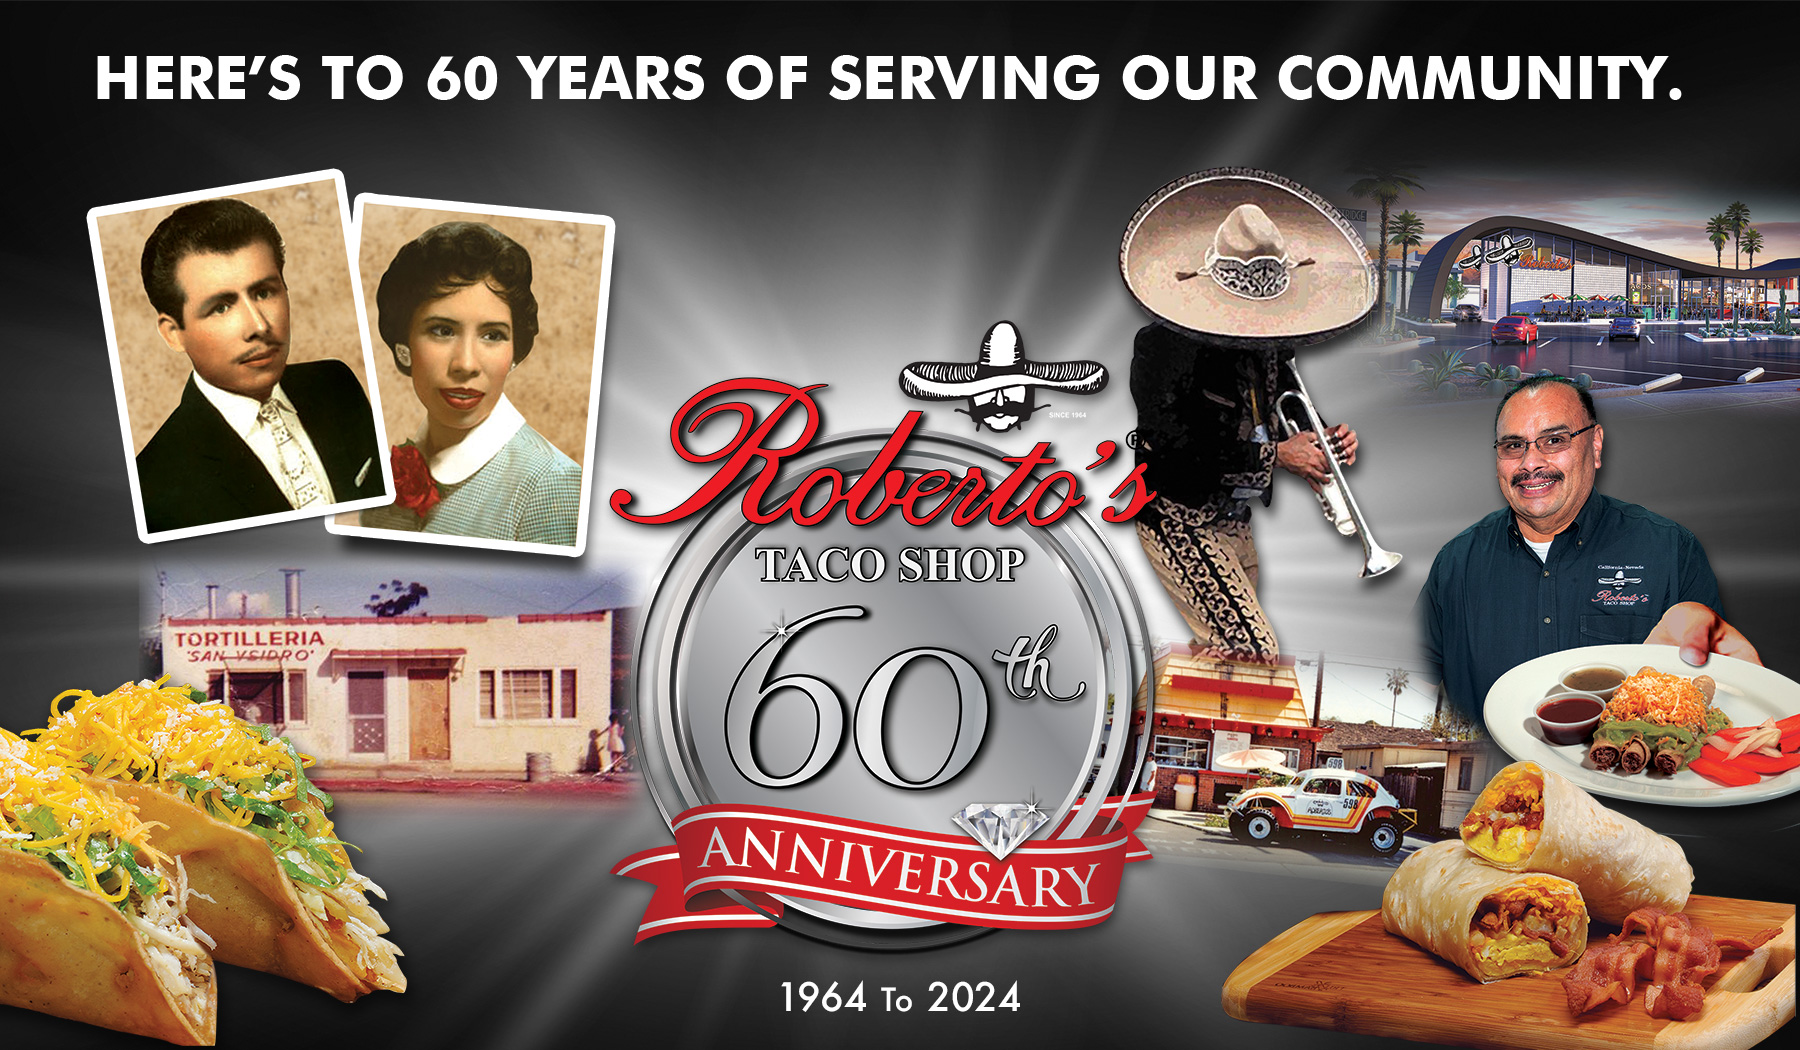 Roberto's Taco Shop 60th Anniversary Celebration poster